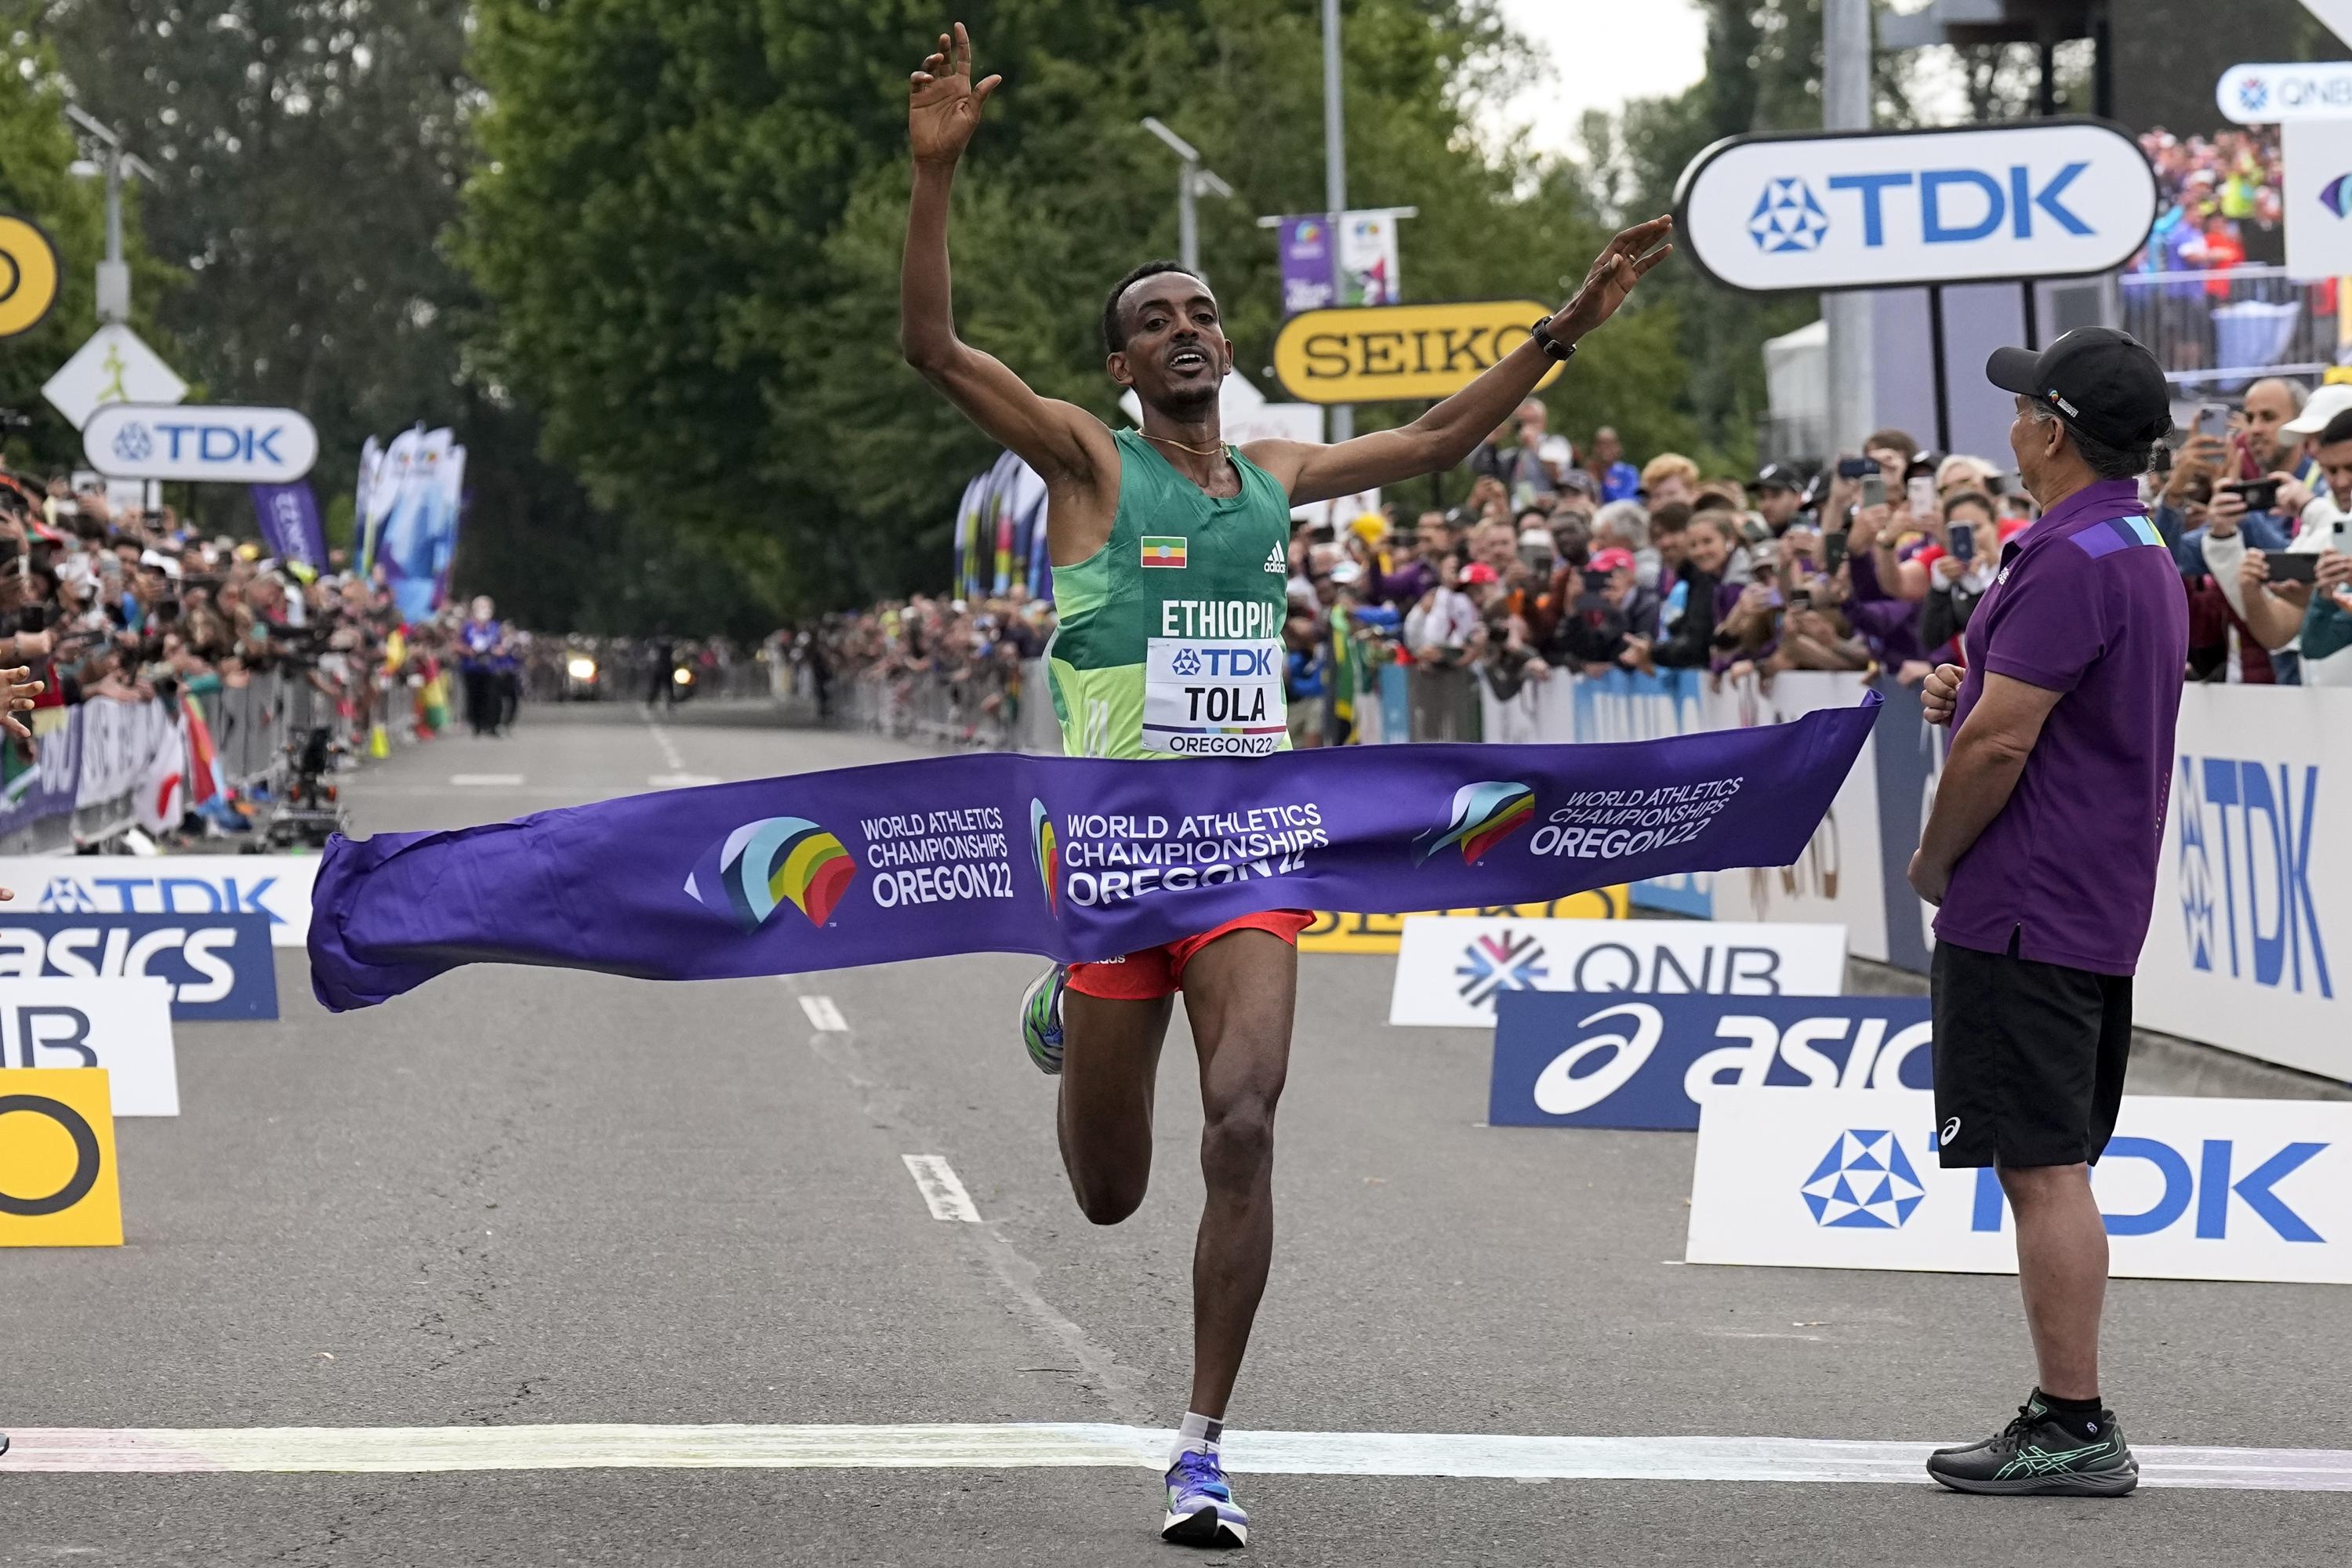 Tamirat Tola, Ethiopia, 1 2 finish, Marathon at worlds, 3000x2000 HD Desktop